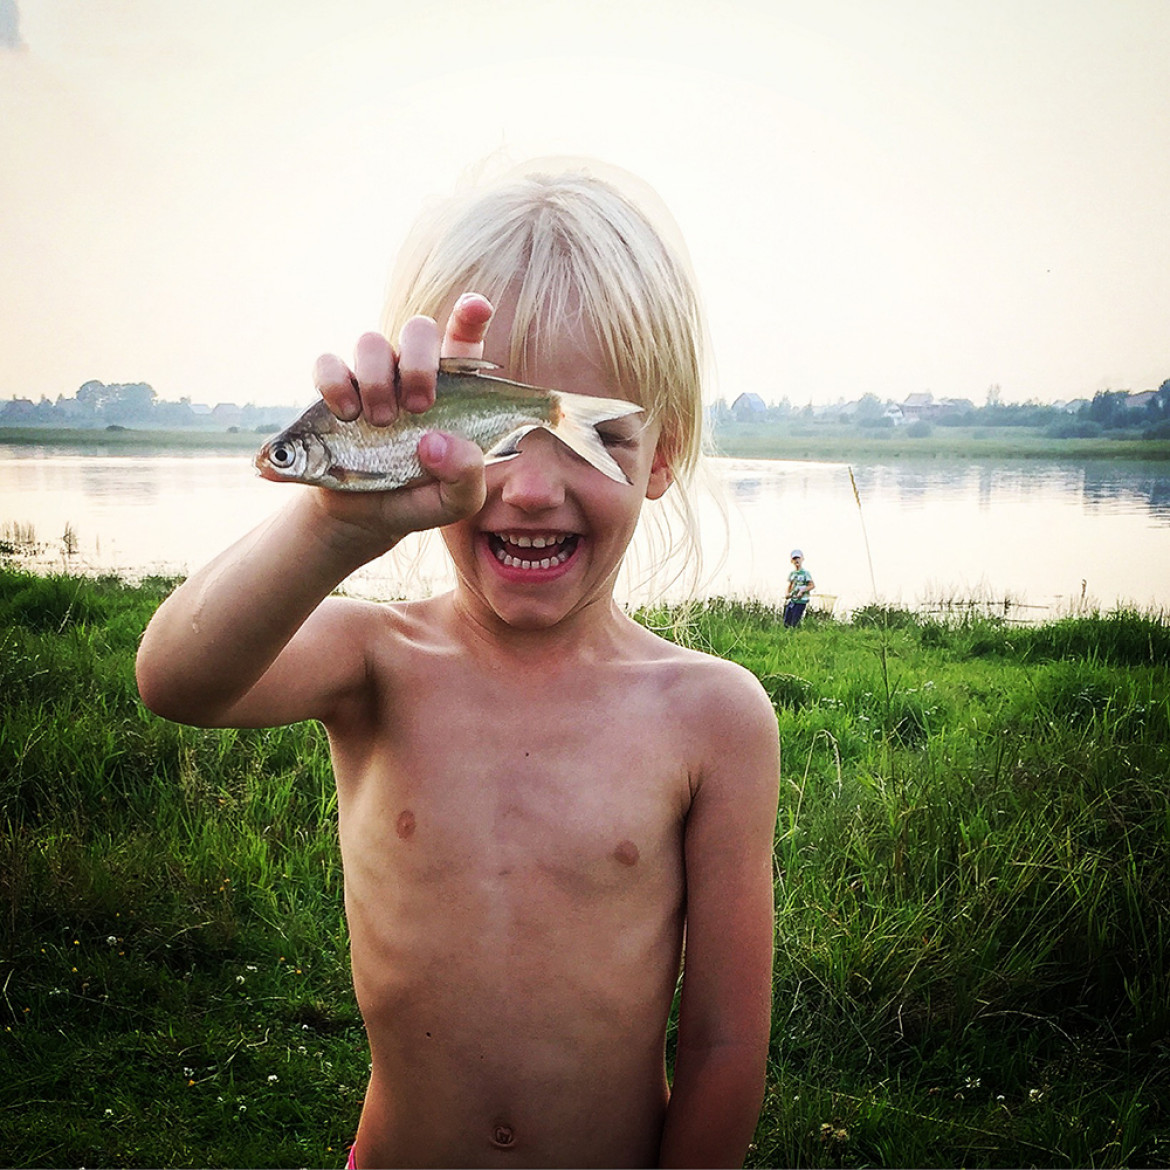 fot. Kirill Voynovskiy, "Look dad!", 2. miejsce w kategorii Children / IPPA 2019